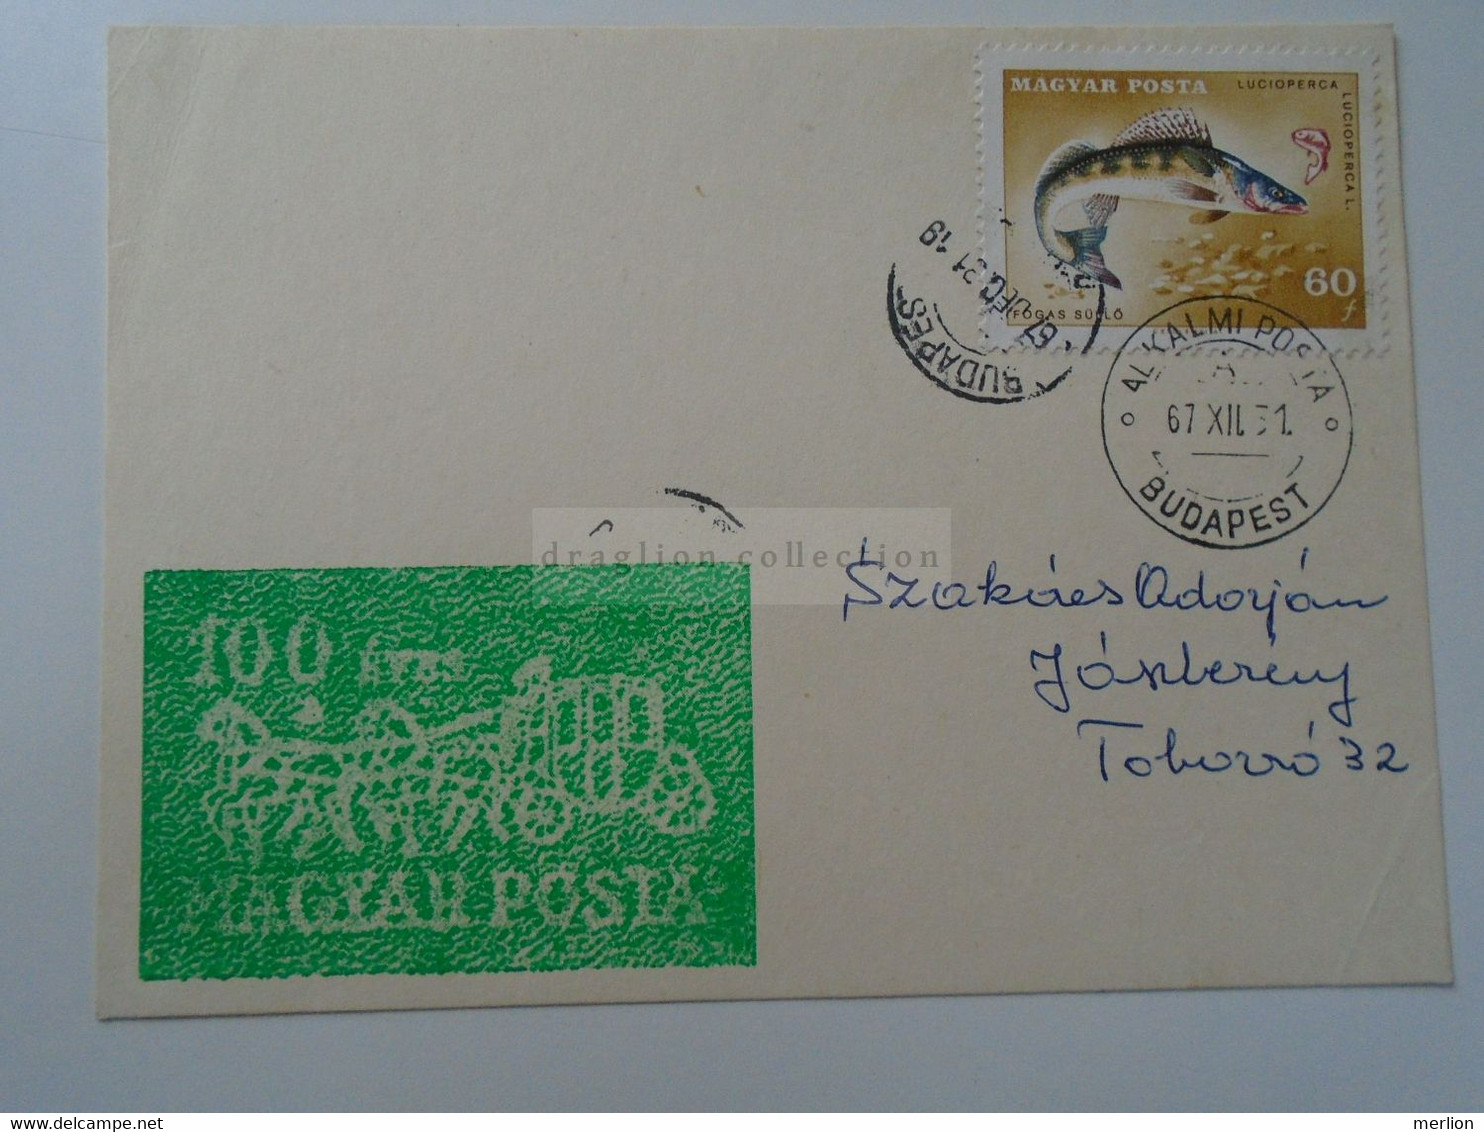 D187068  HUNGARY  Postmark     MAGYAR POSTA   - Hungarian Post - 1967 Alkalmi Posta  Budapest - Marcophilie